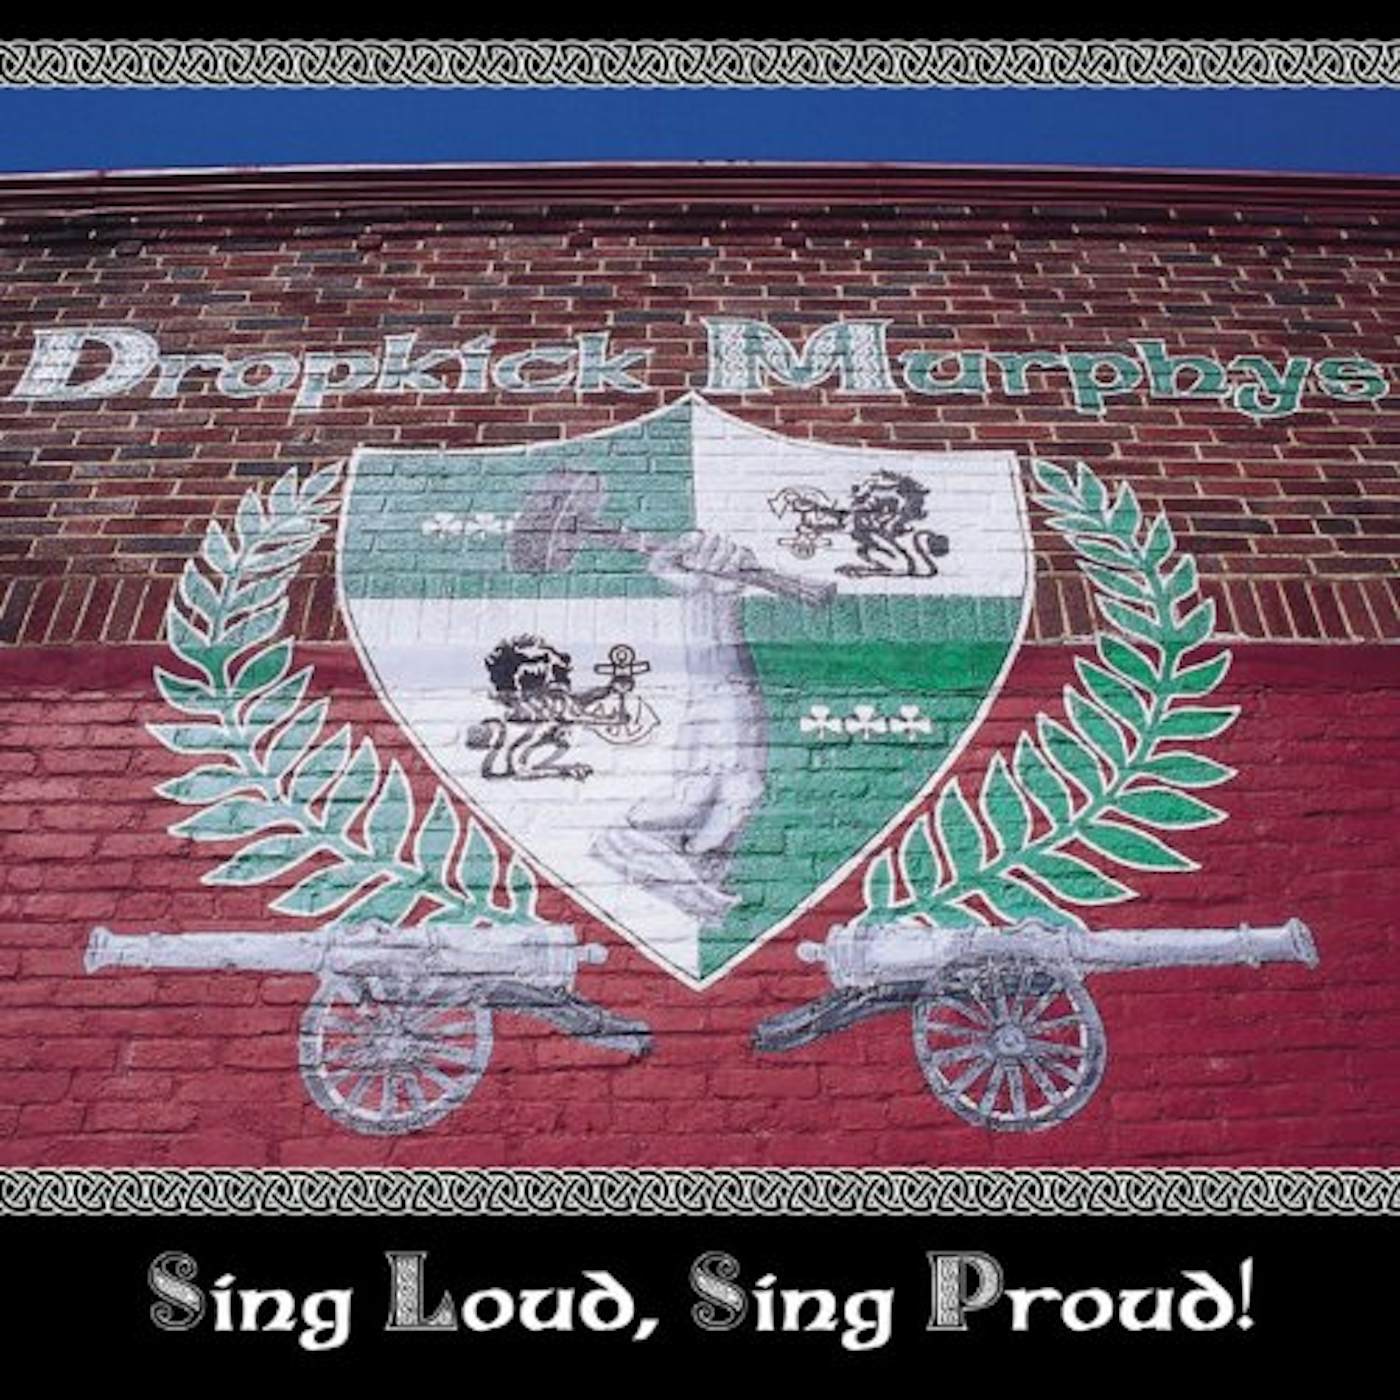 Dropkick Murphys SING LOUD SING PROUD Vinyl Record